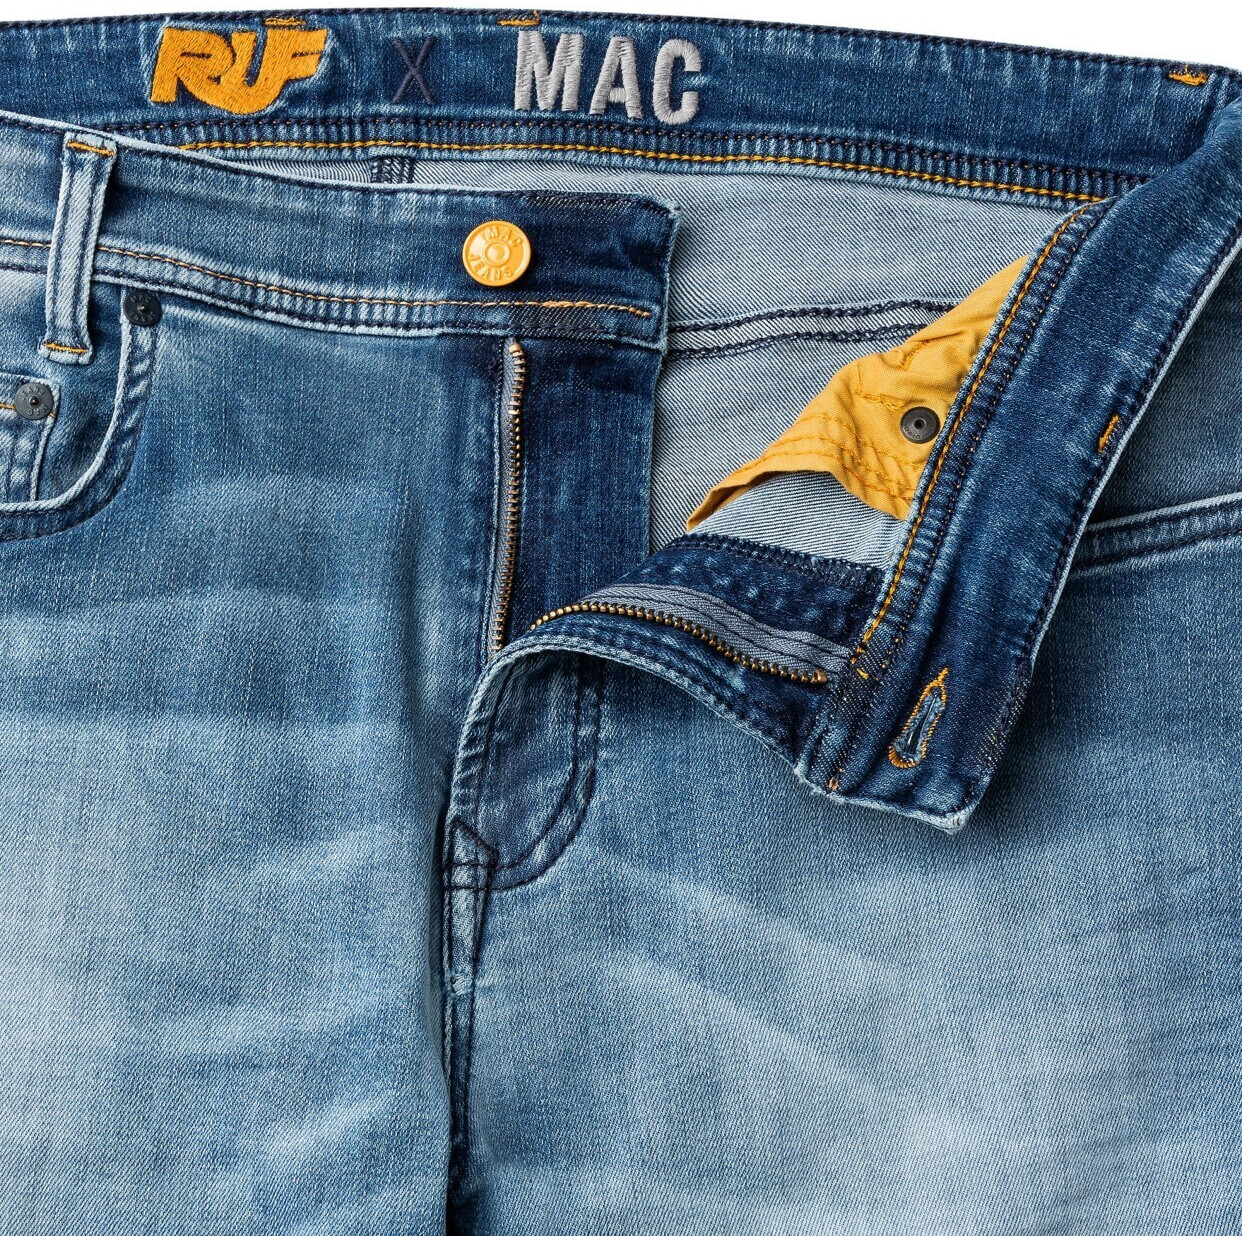 MAC bei | Preisvergleich used blue 76,79 Macflexx venice ab €